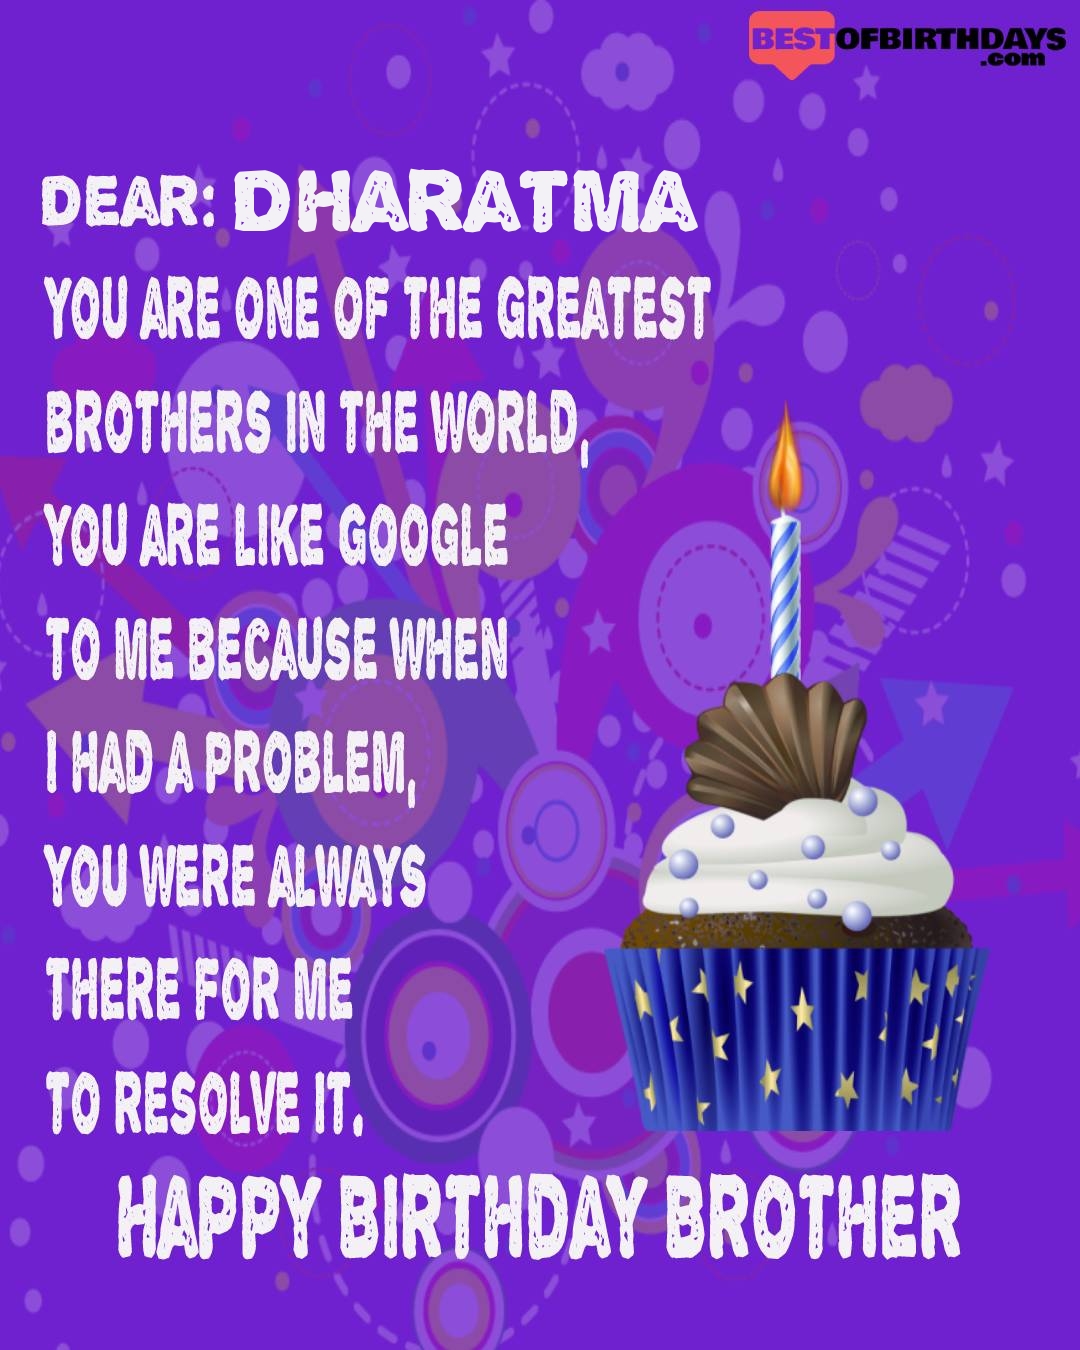 Happy birthday dharatma bhai brother bro